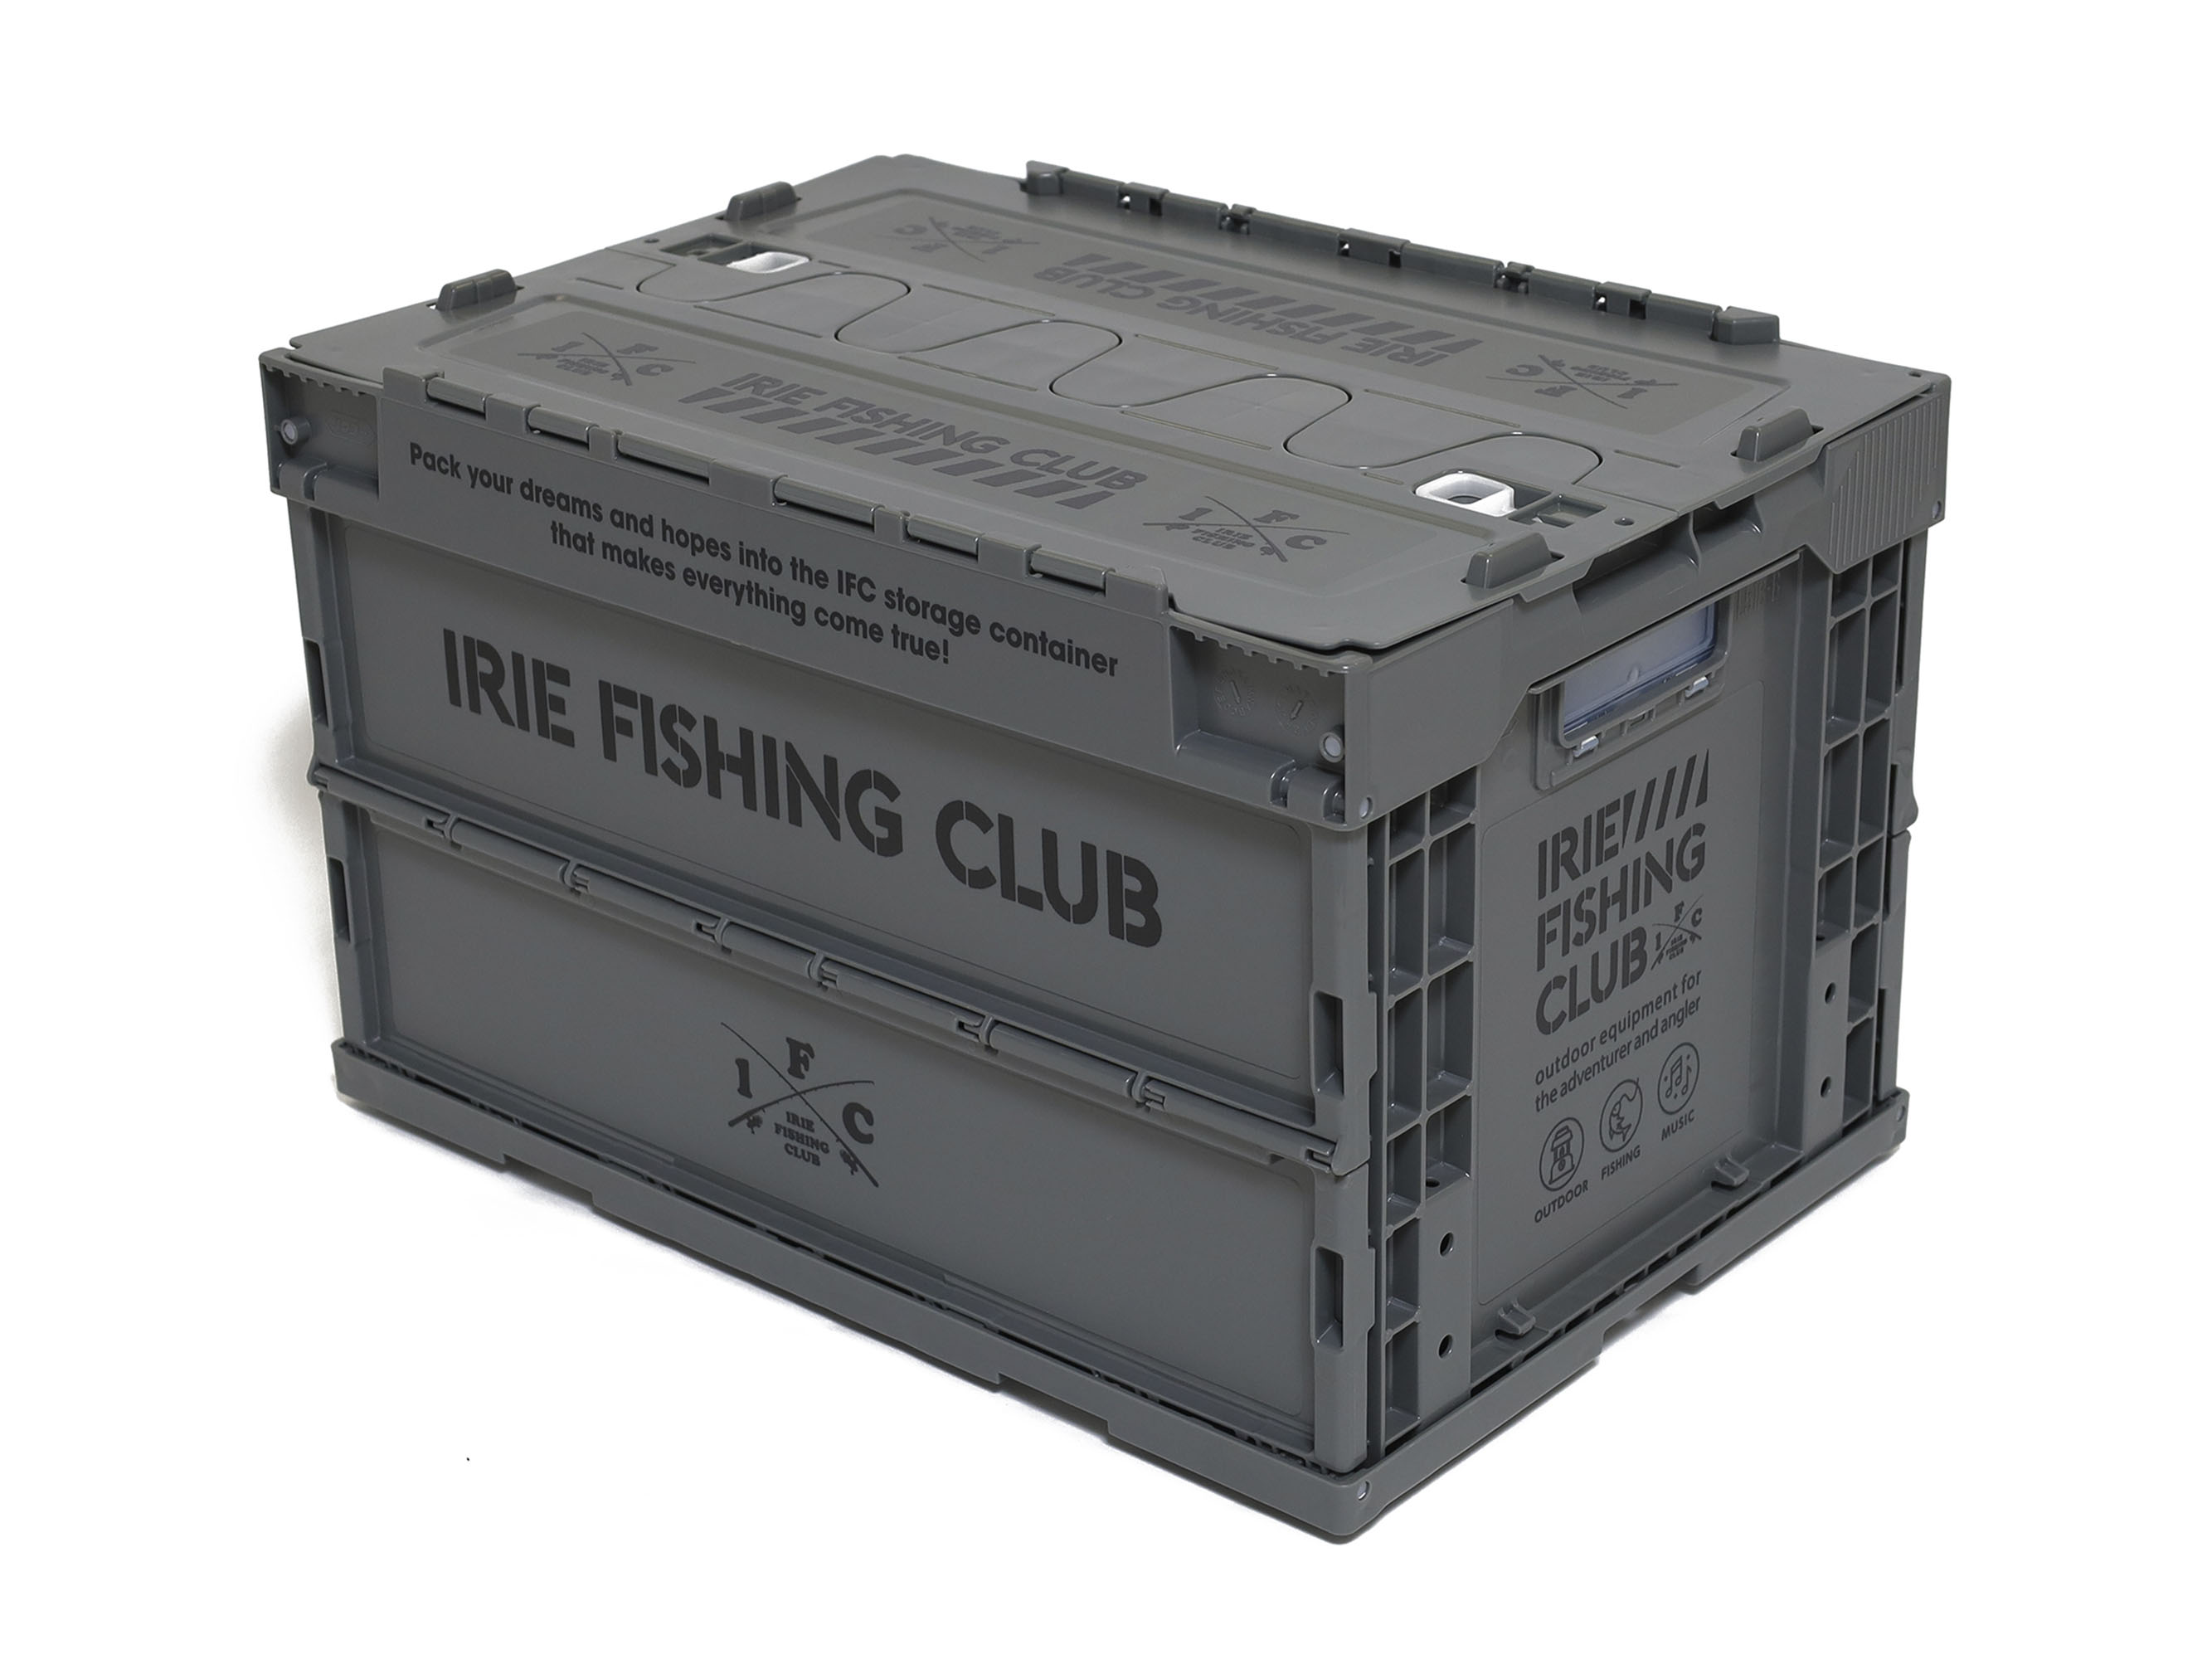 I.F.C STORAGE CONTAINER - IRIE FISHING CLUB